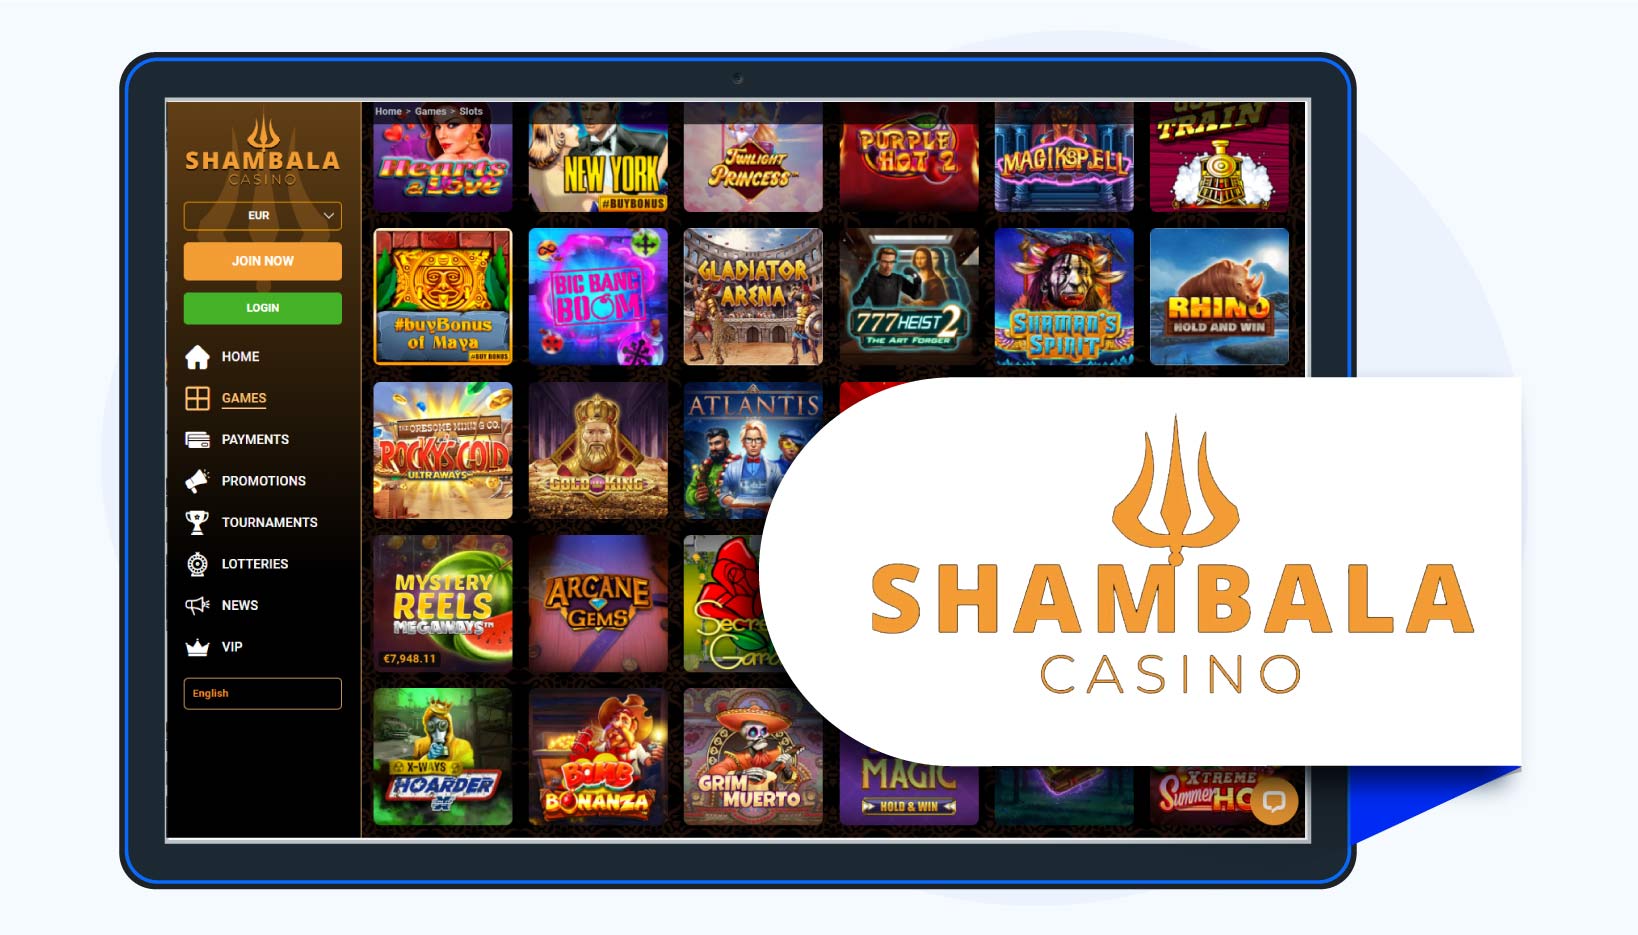 50 no deposit free spins on Aztec Magic at Shambala Casino